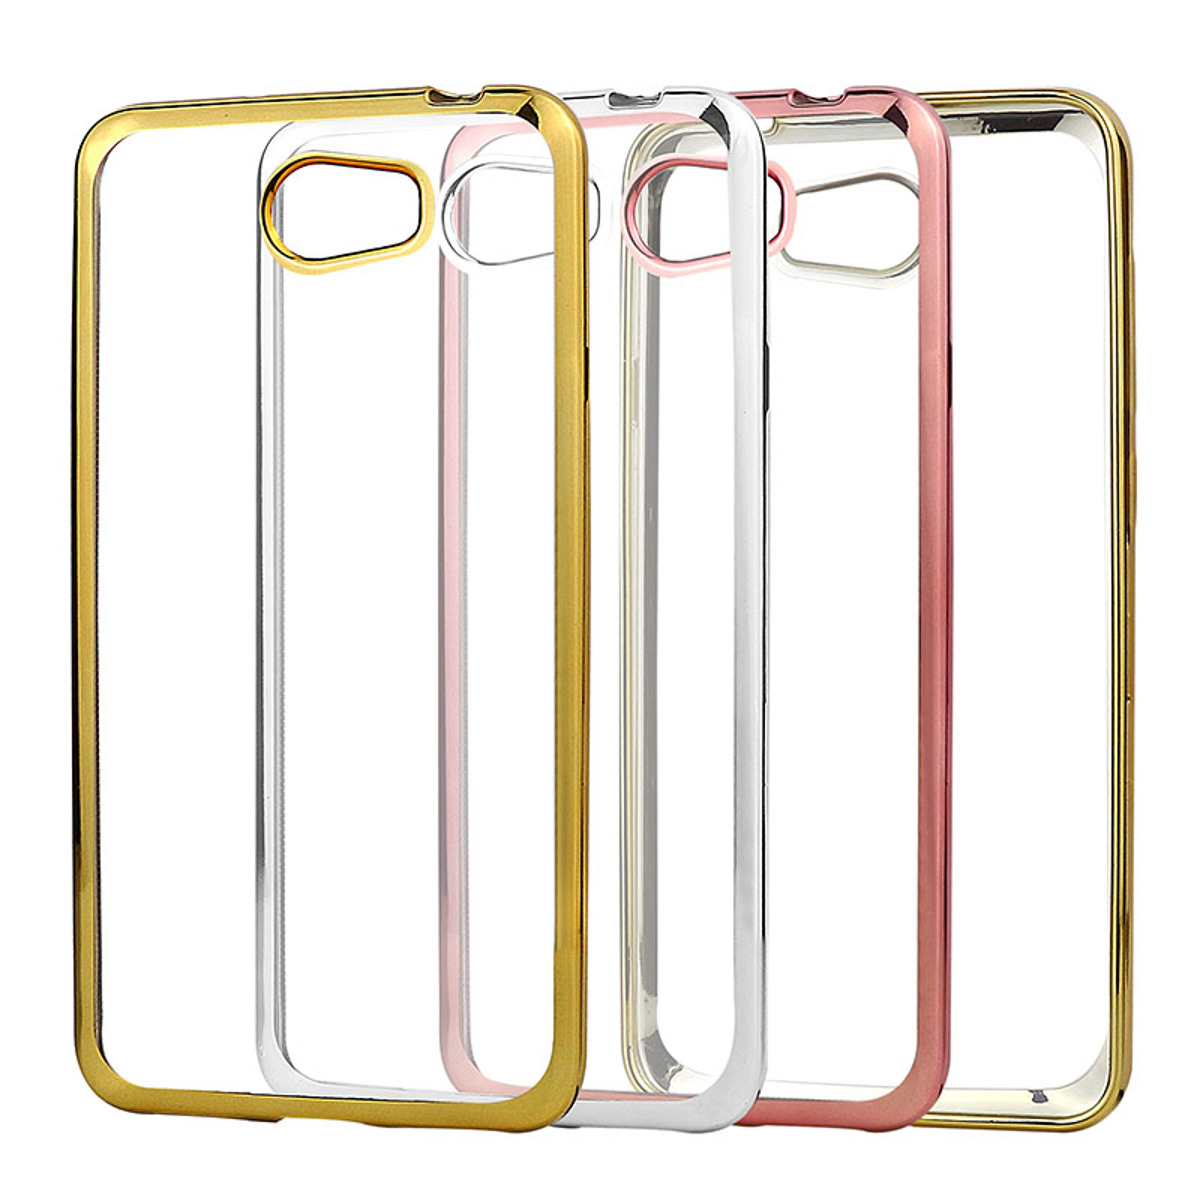 Pouzdro ELECTRO JELLY Samsung G950F Galaxy S8 transparentní růžovo/zlaté